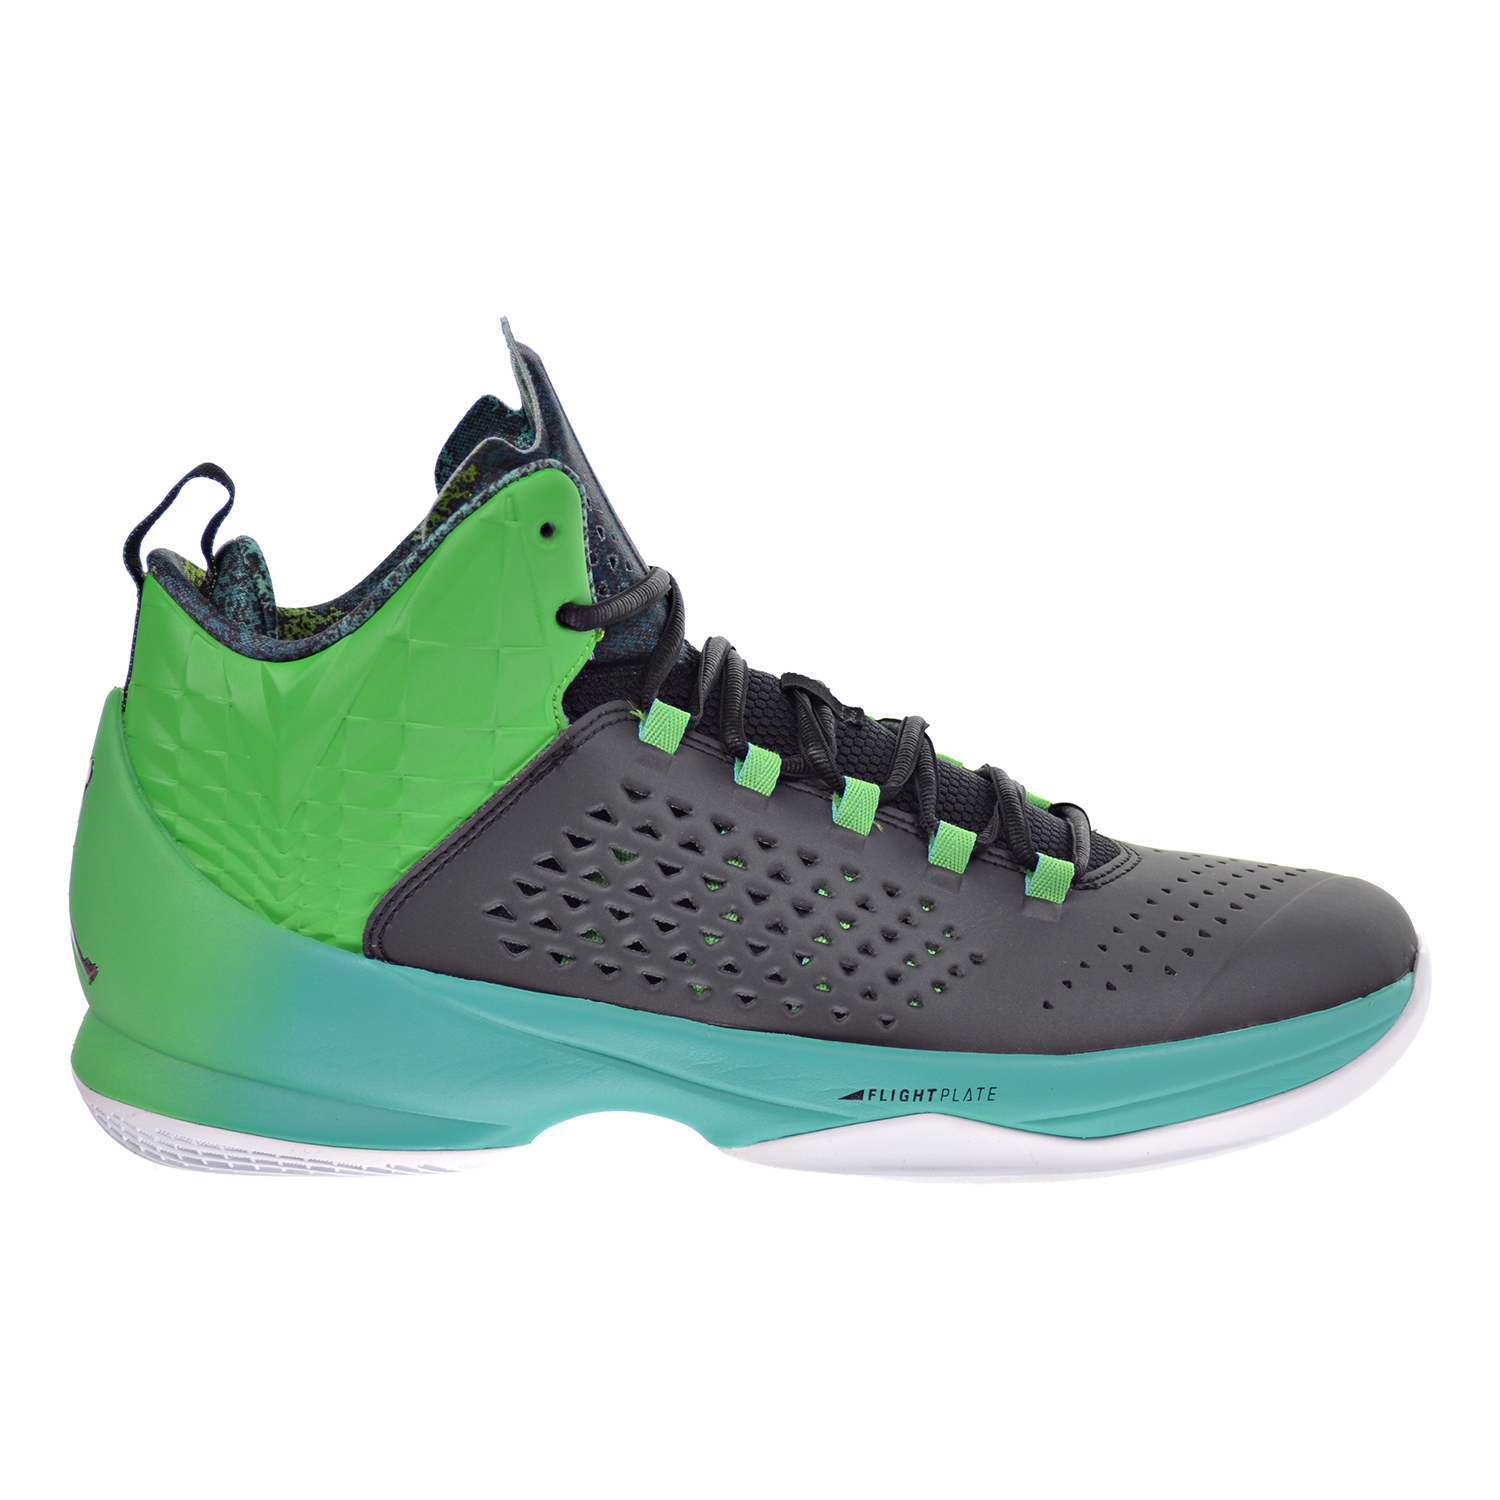 Jordan Melo M11 Men's Shoes Black/Black/Light Green/Spark 716227-008 | eBay